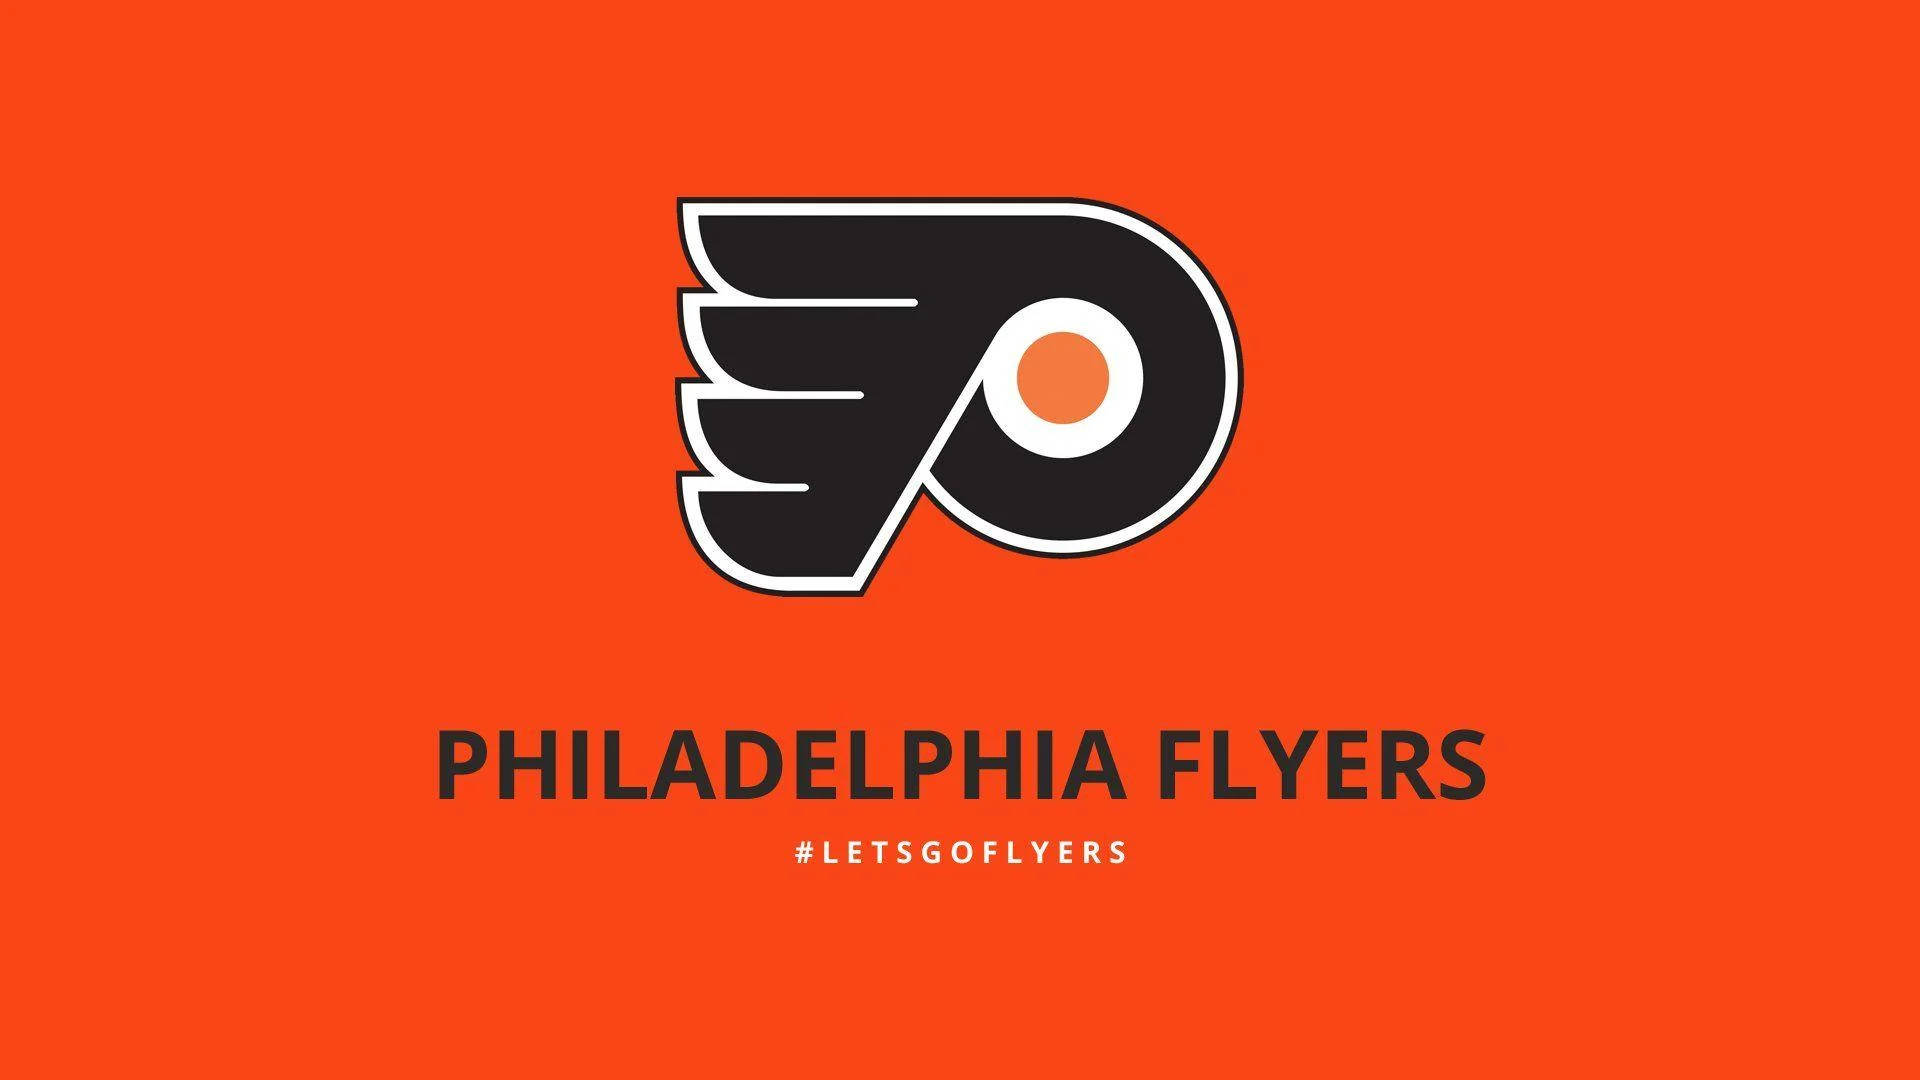 Top 999+ Philadelphia Flyers Wallpaper Full HD, 4K✅Free to Use